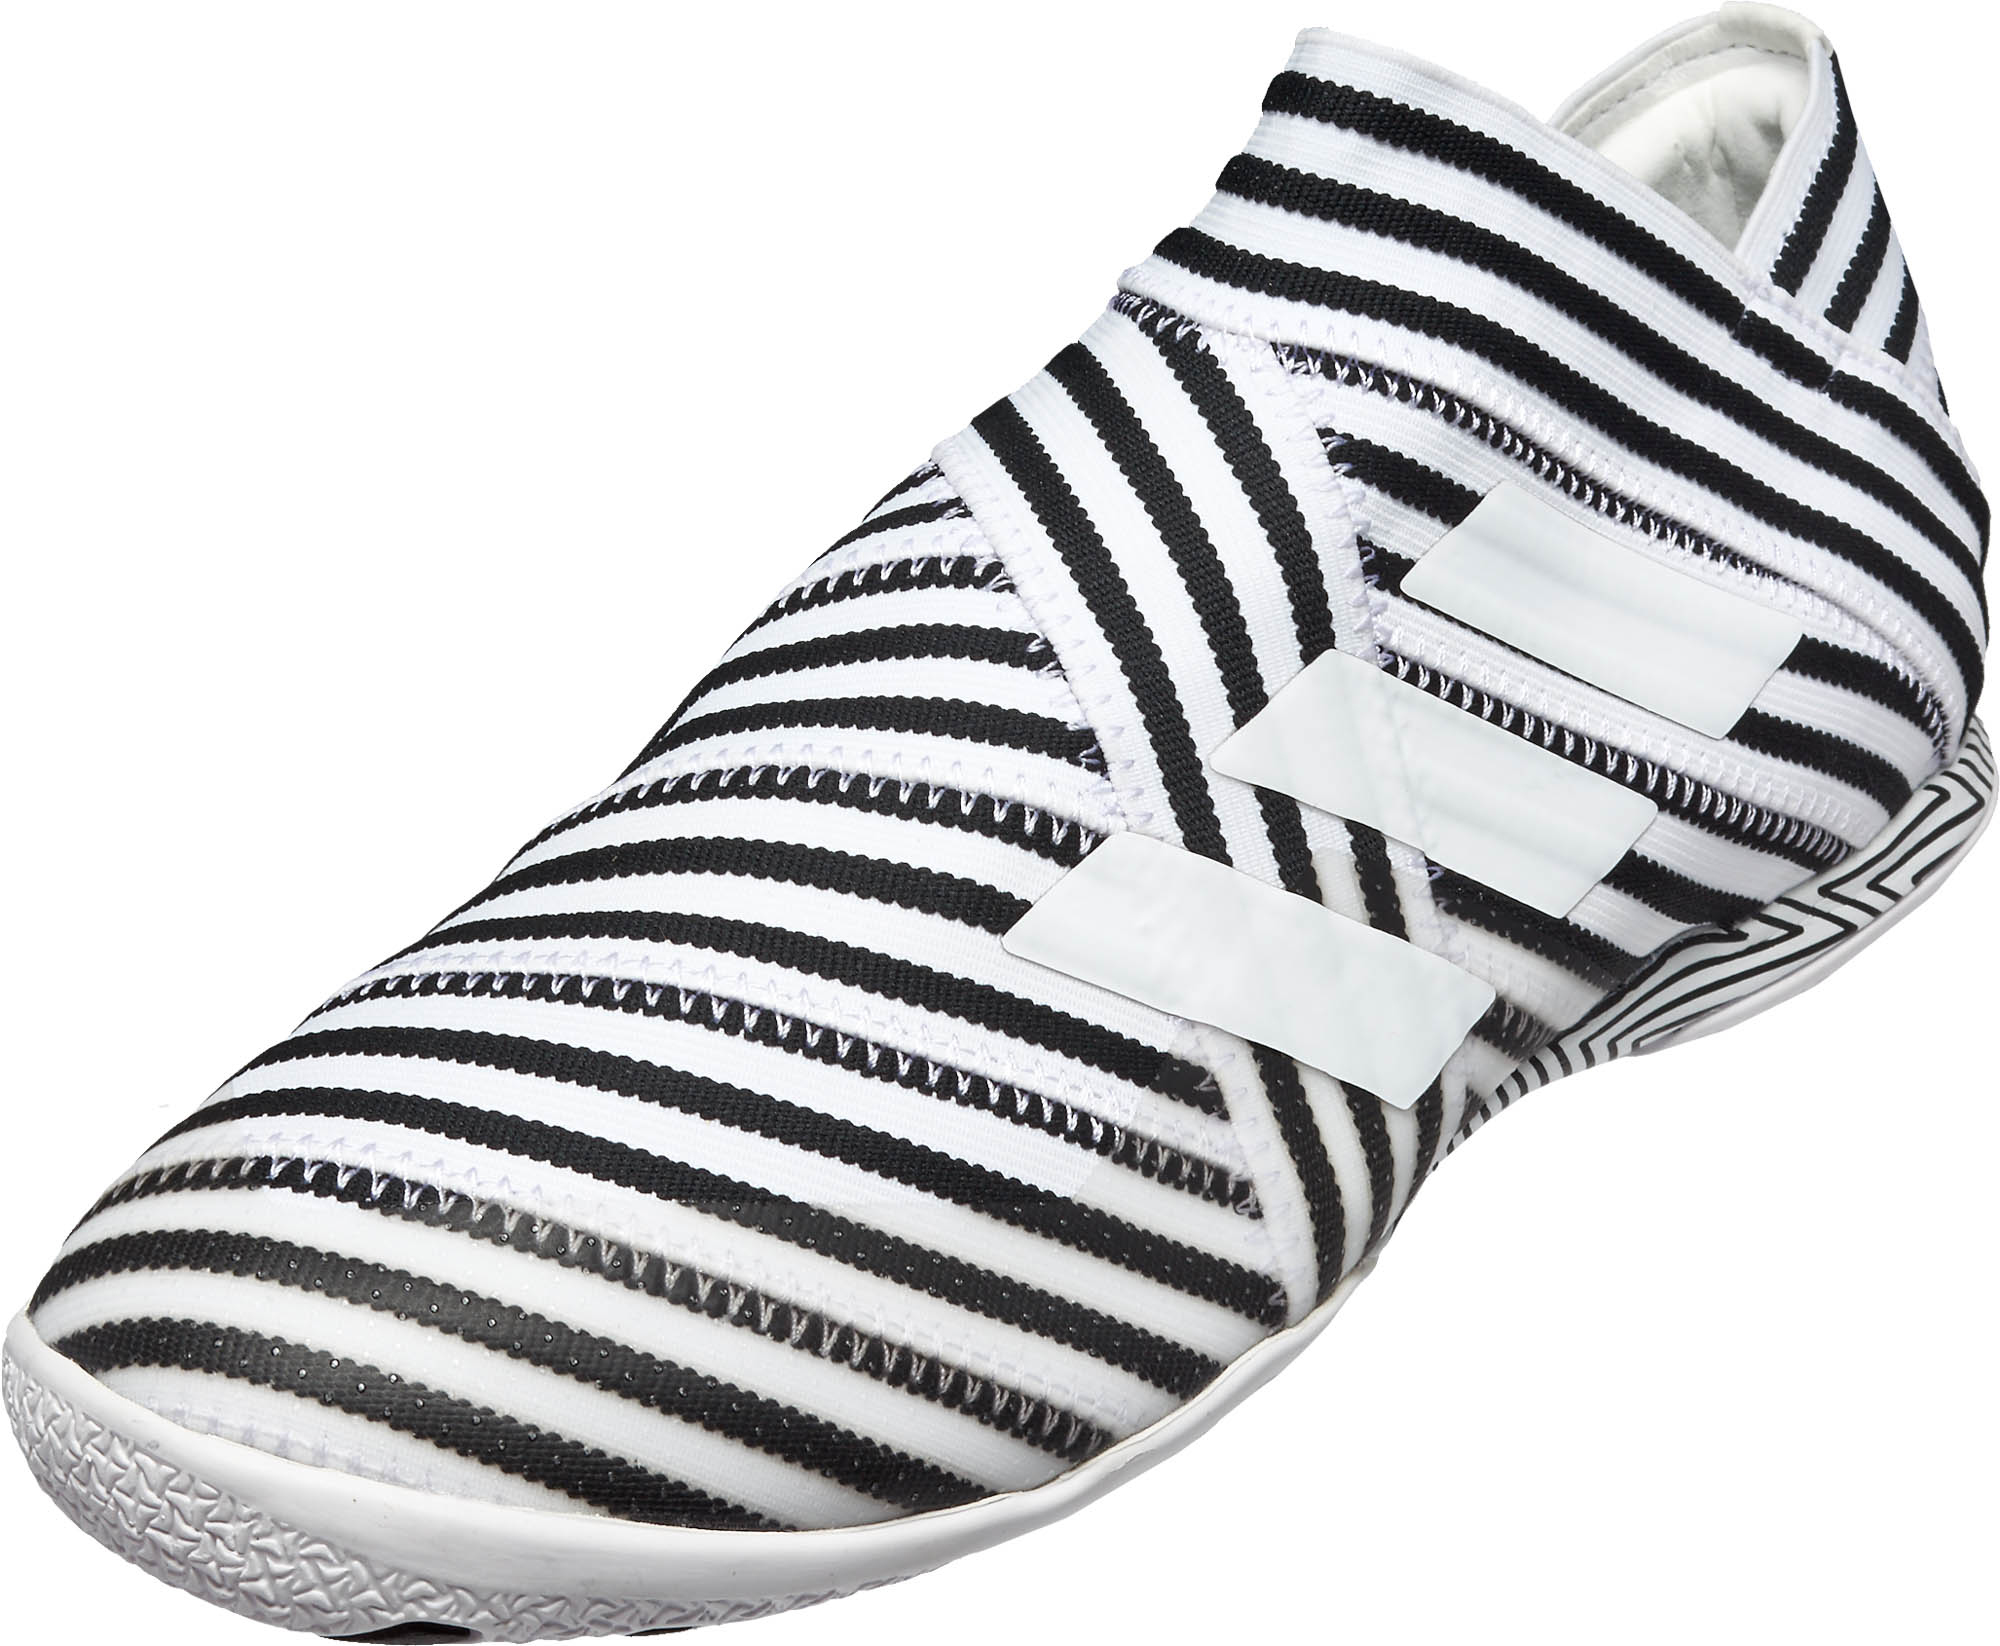 Psychiatrie Dierentuin Getuigen adidas Nemeziz Tango 17+ 360Agility Soccer Shoes - White & Black - Soccer  Master